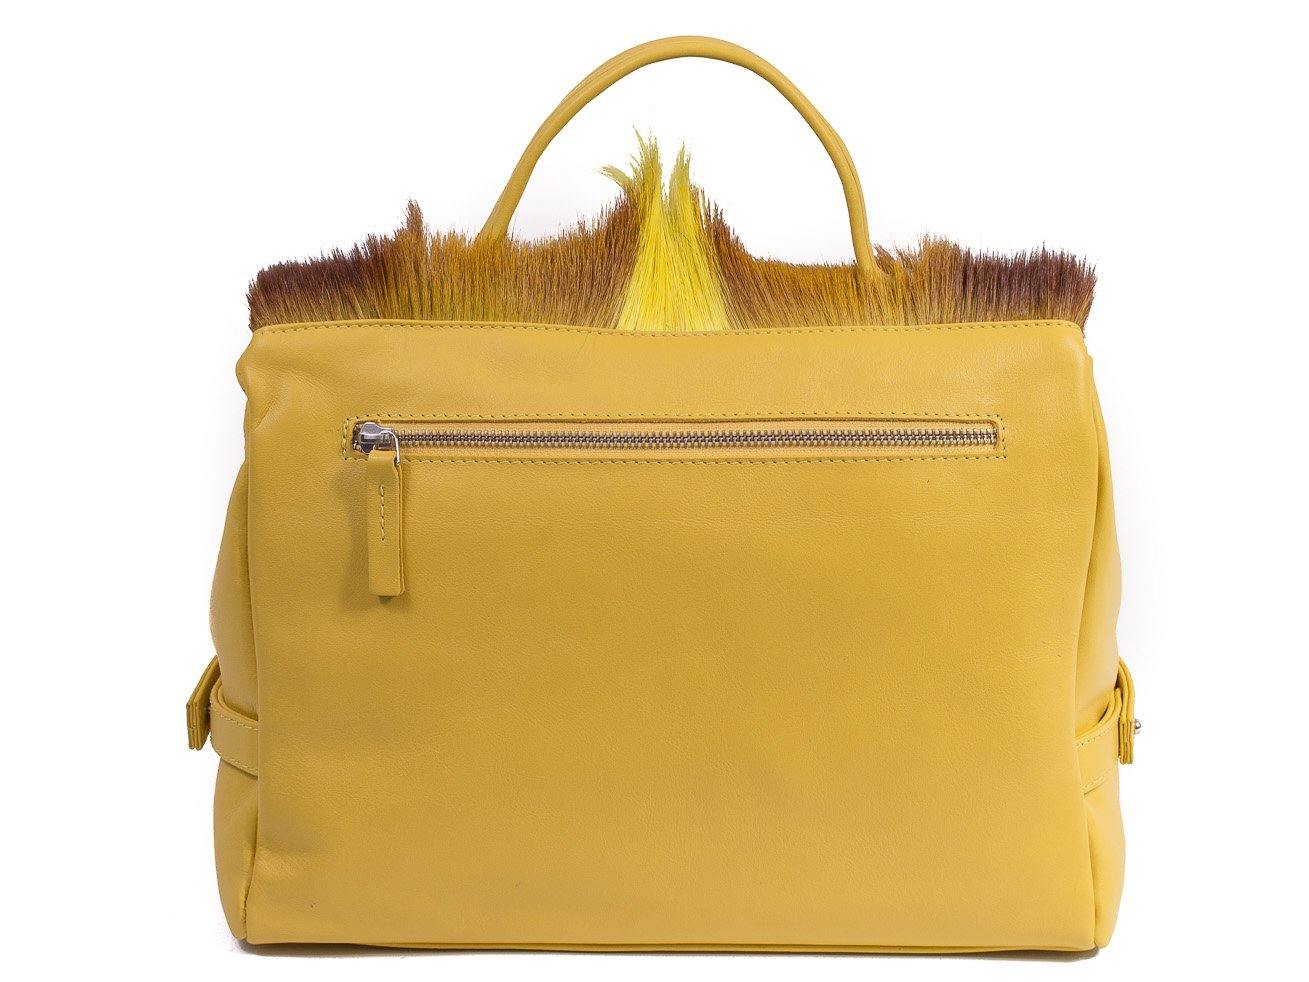 sherene melinda springbok hair-on-hide yellow leather smith tote bag Fan back